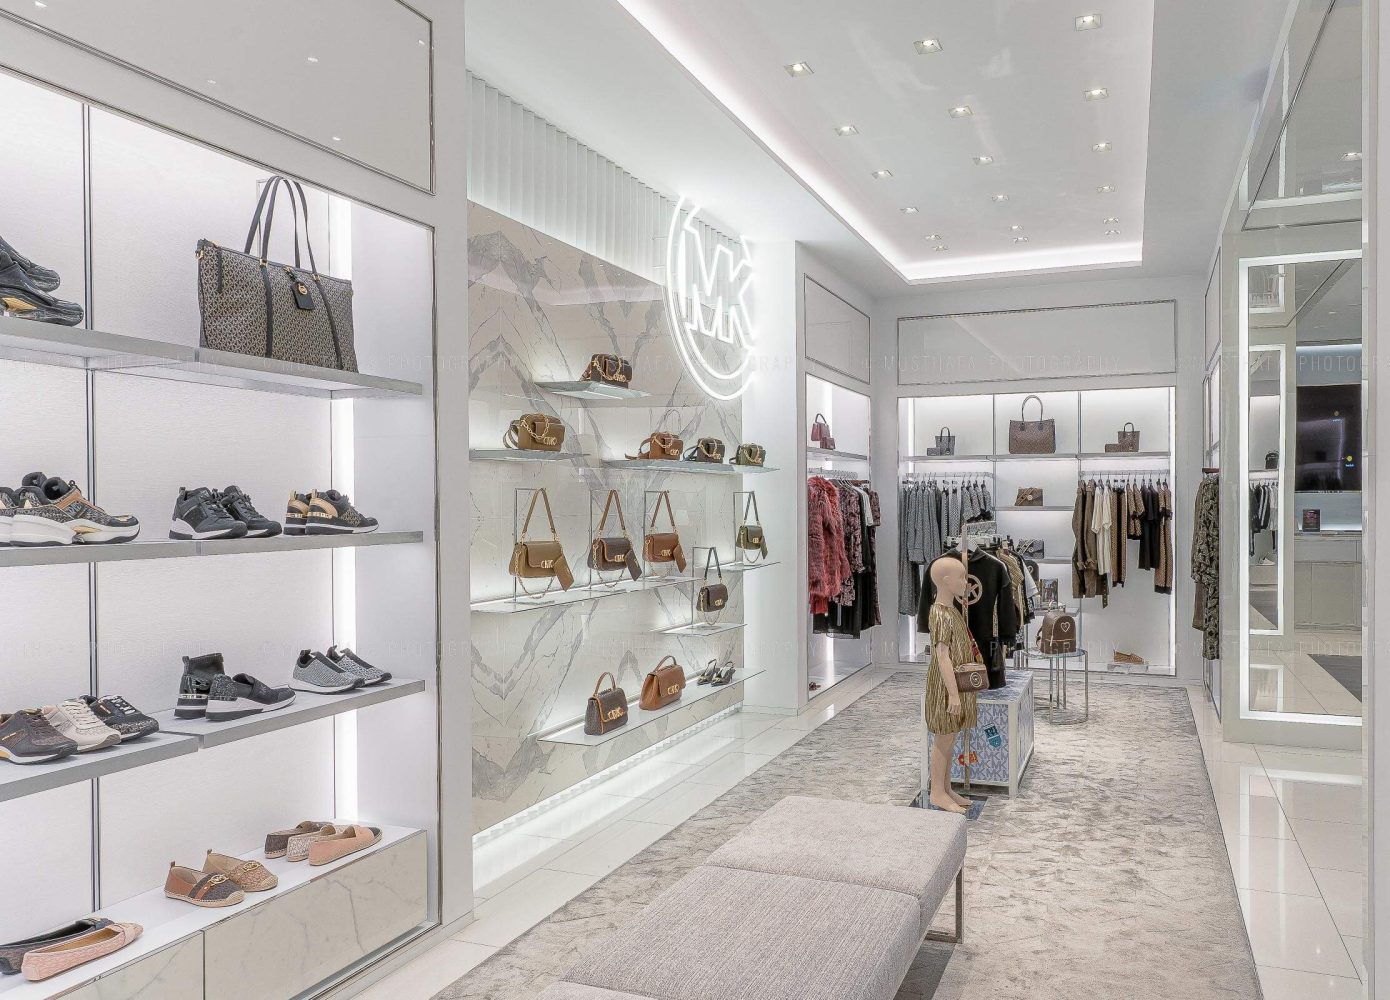 Michael Kors fashion store high end boutique retail photography Dubai Abu Dhabi UAE Qatar Doha Kuwait Bahrain Oman Saudi Arabia KSA Riyadh Bahrain 01